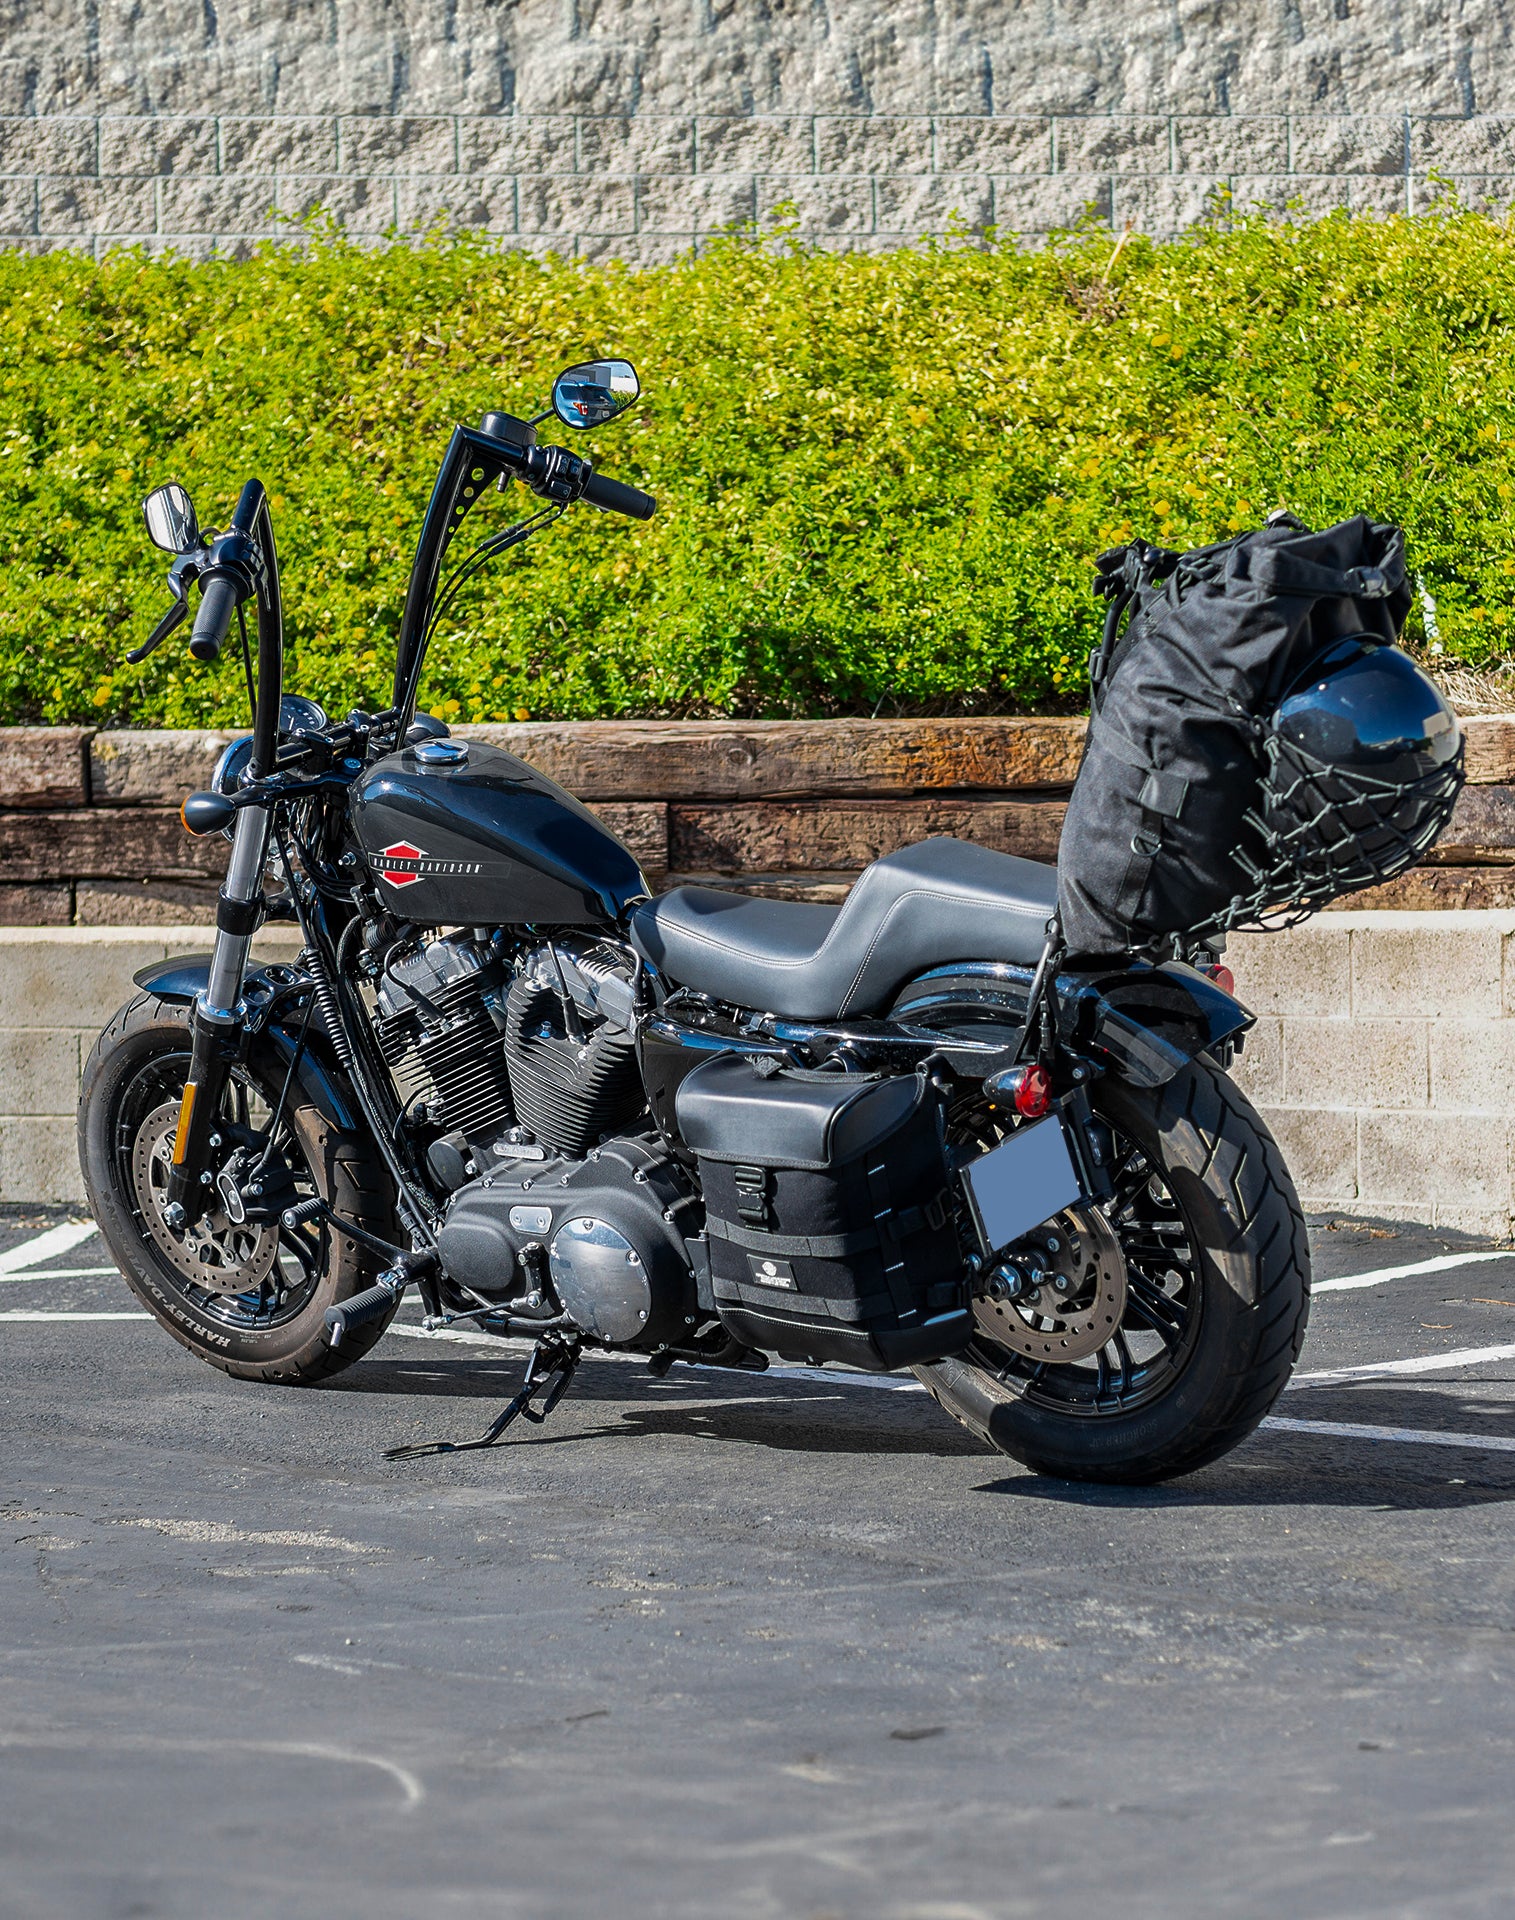 32L - Vanguard Large Dry Harley Davidson Motorcycle Tail Bag